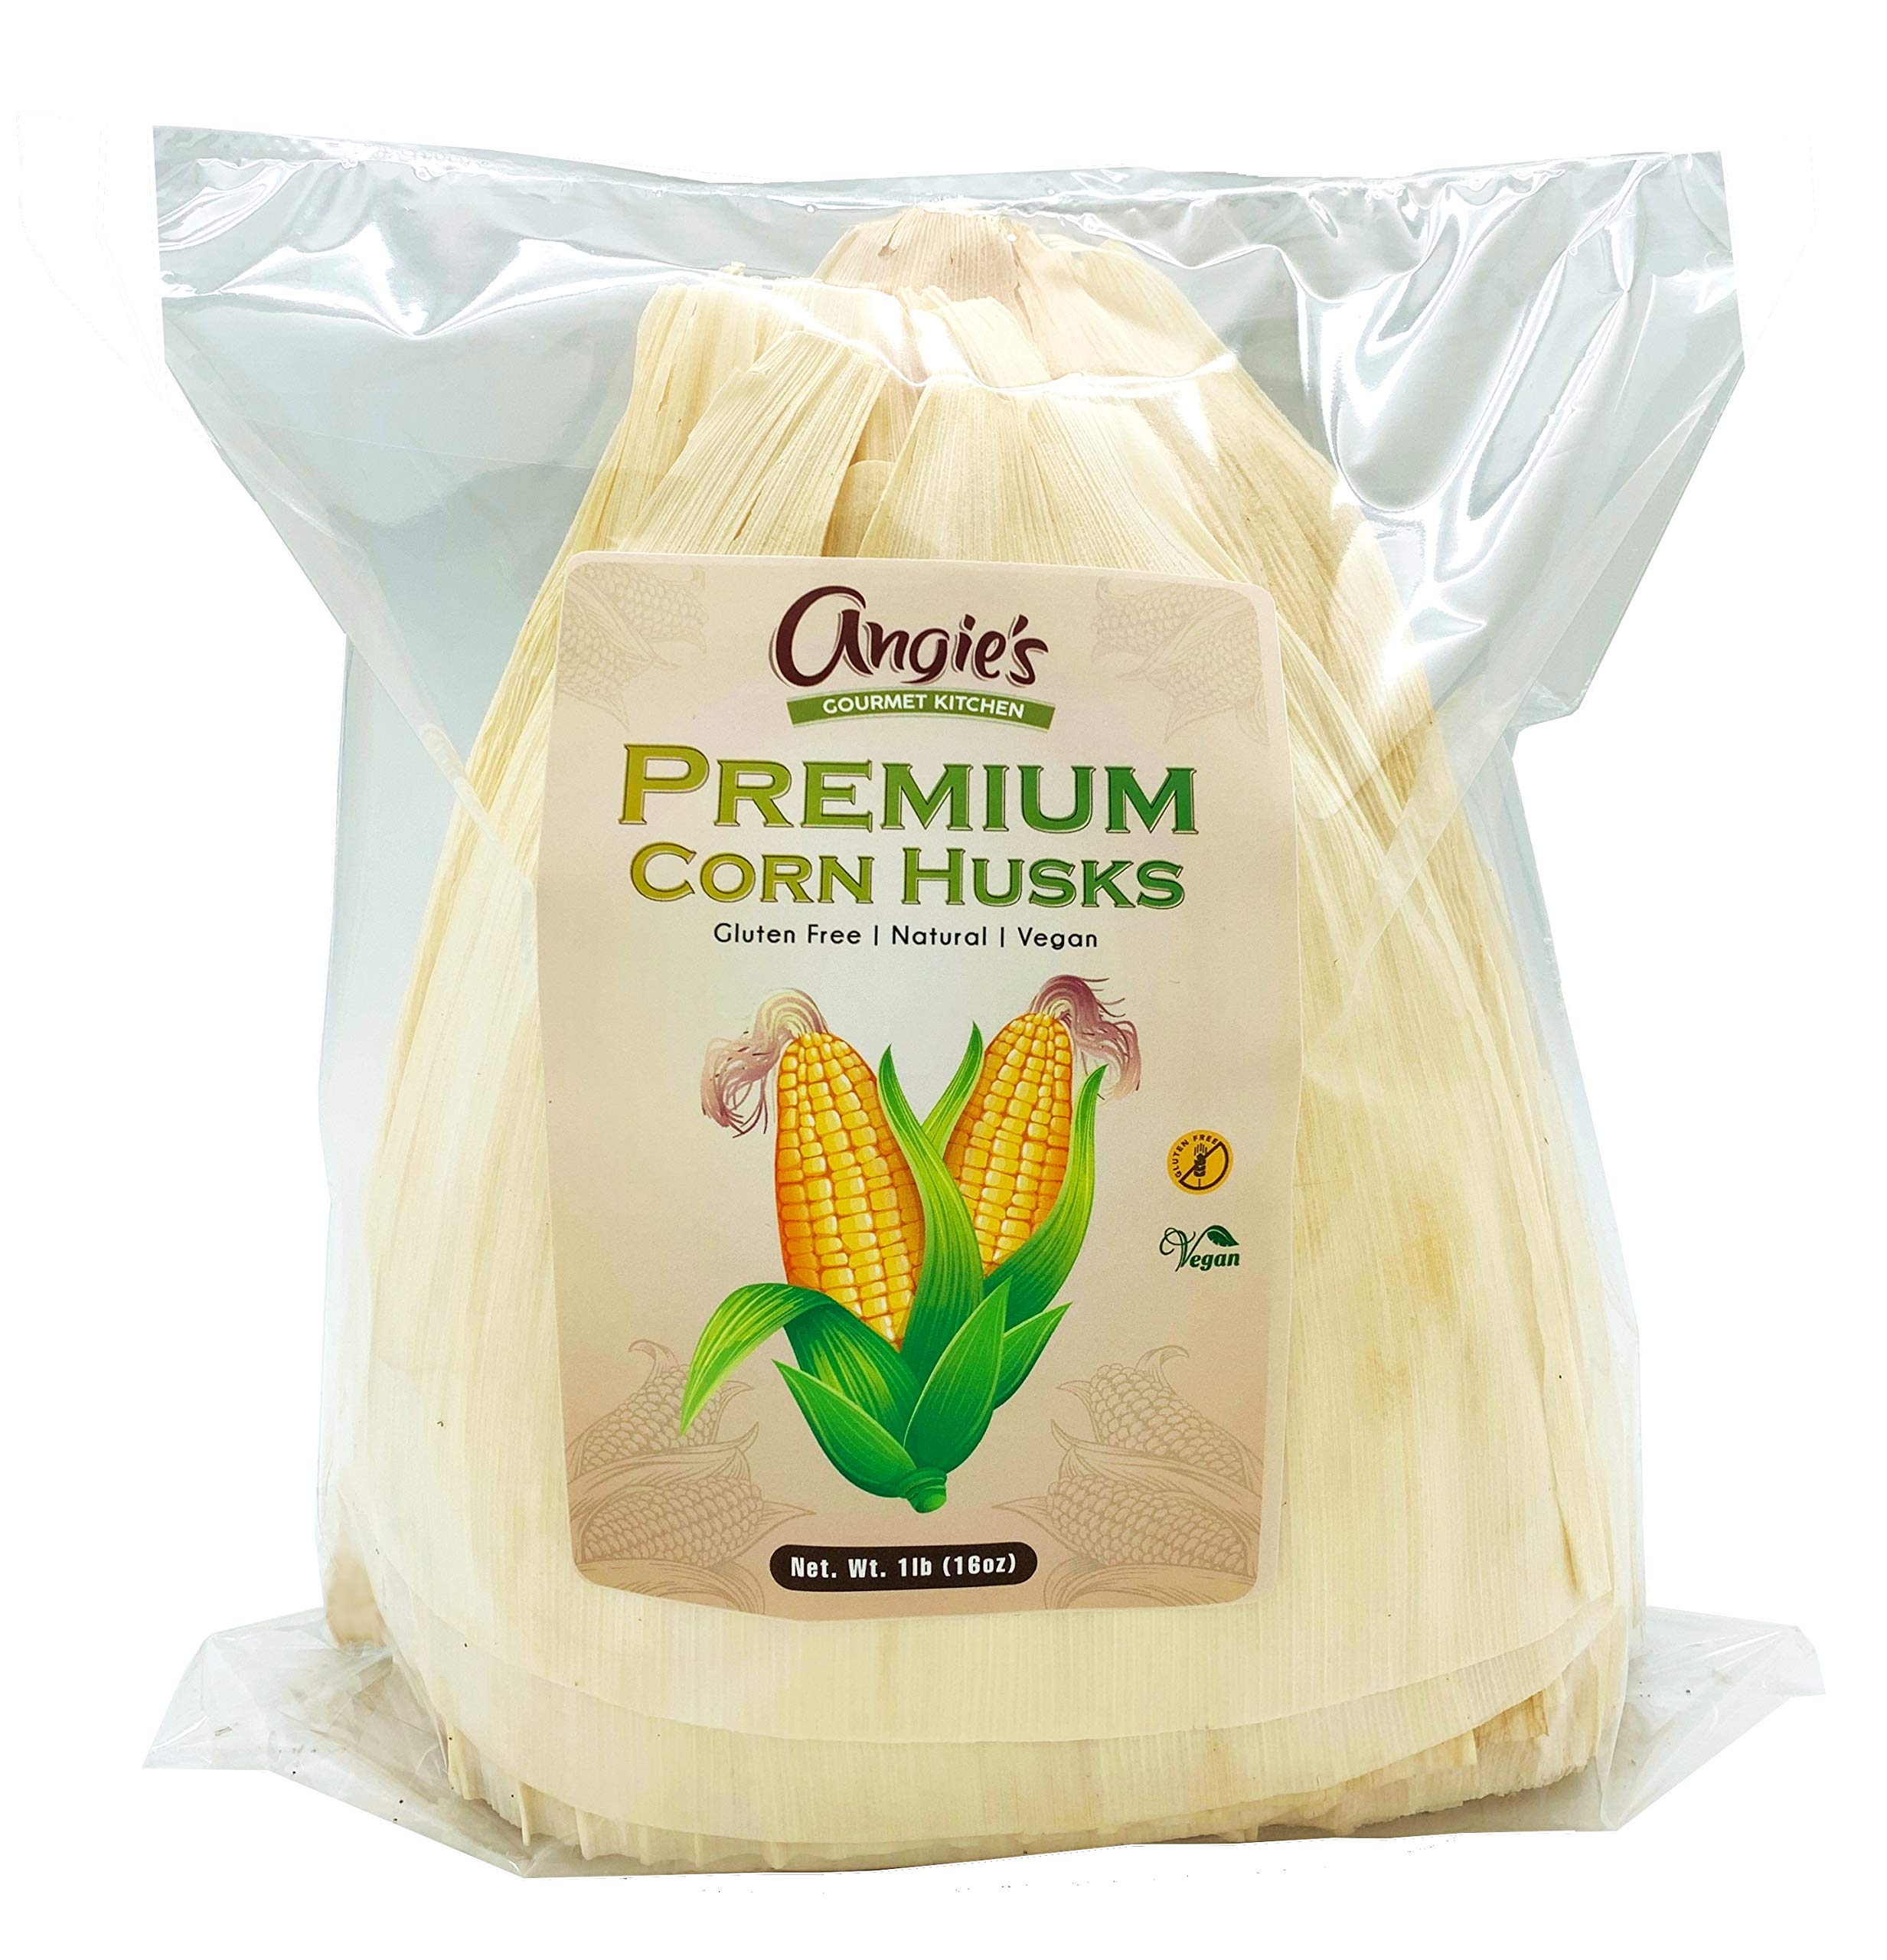 Angie's Gourmet Kitchen Premium Corn Husks 1lb (16oz)